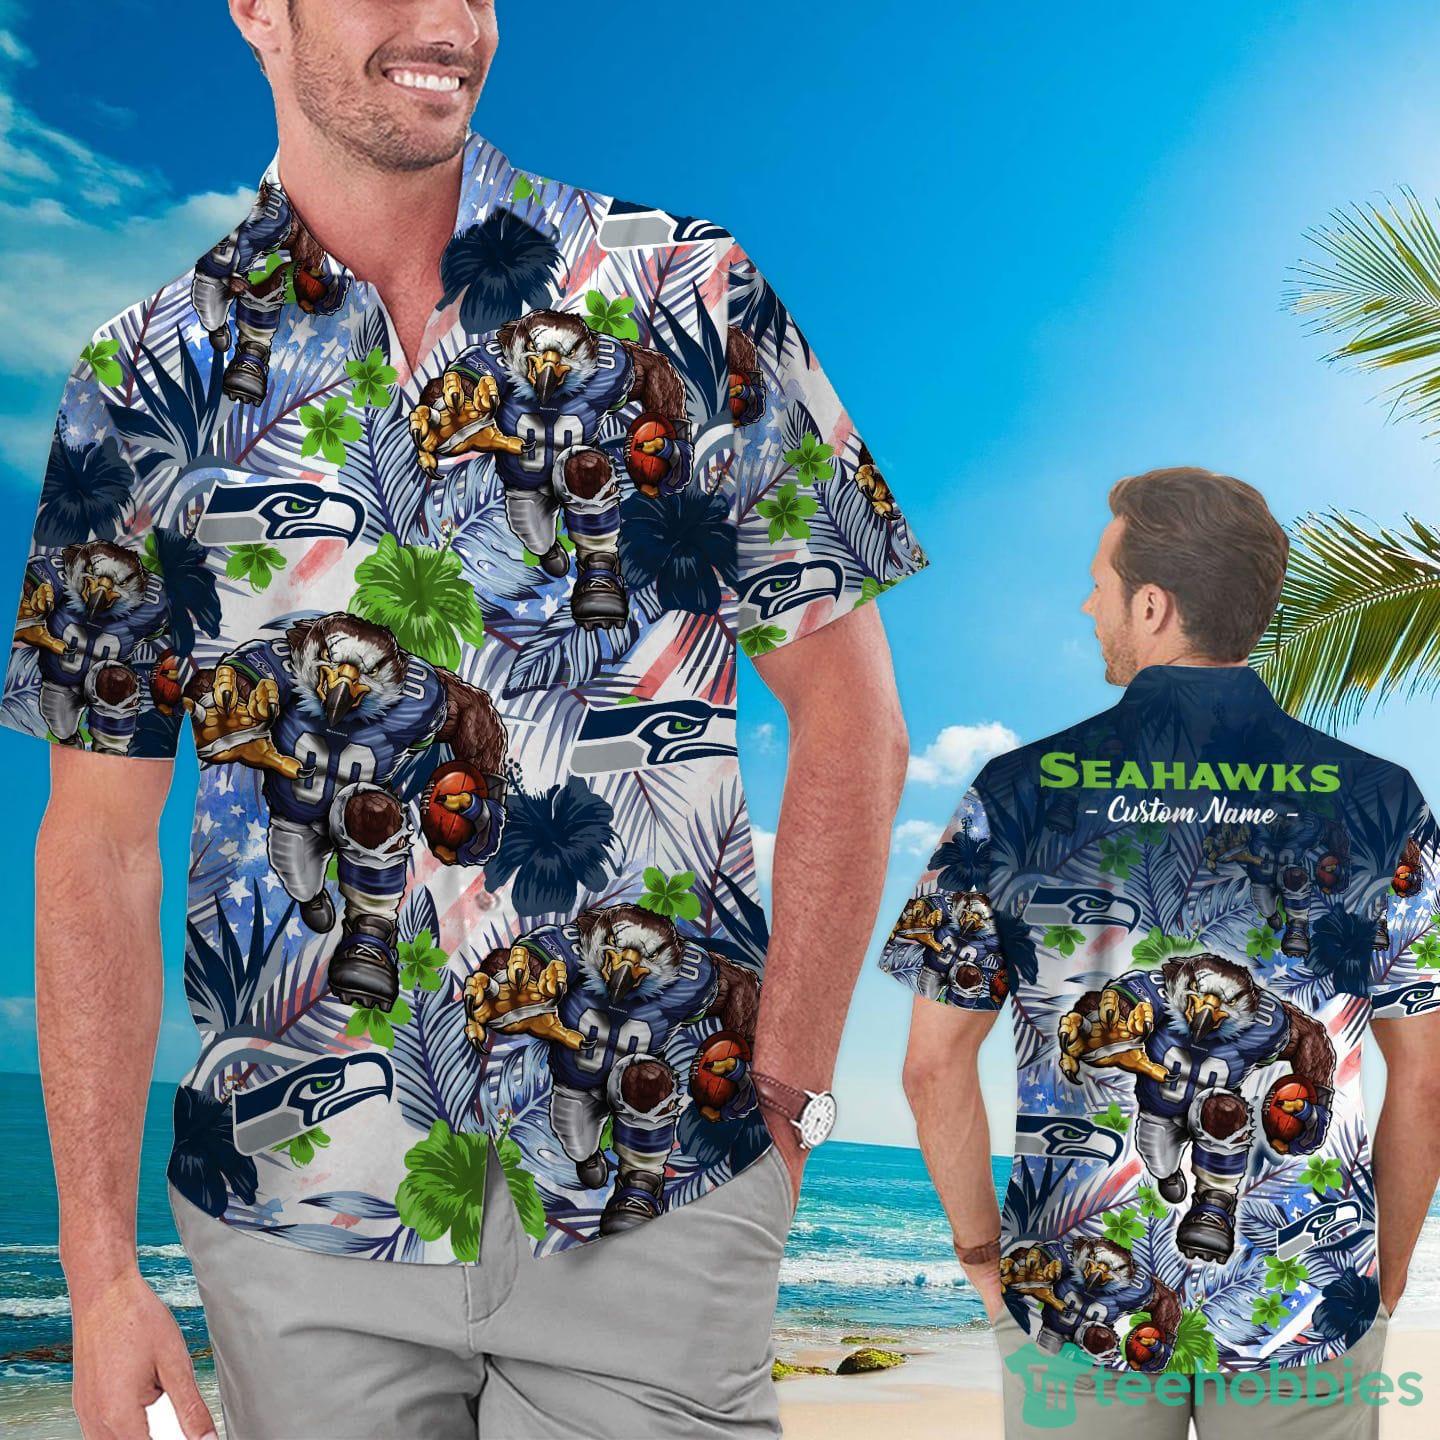 Dallas Stars NHL Flower Hawaiian Shirt Unique Gift For Fans - Freedomdesign